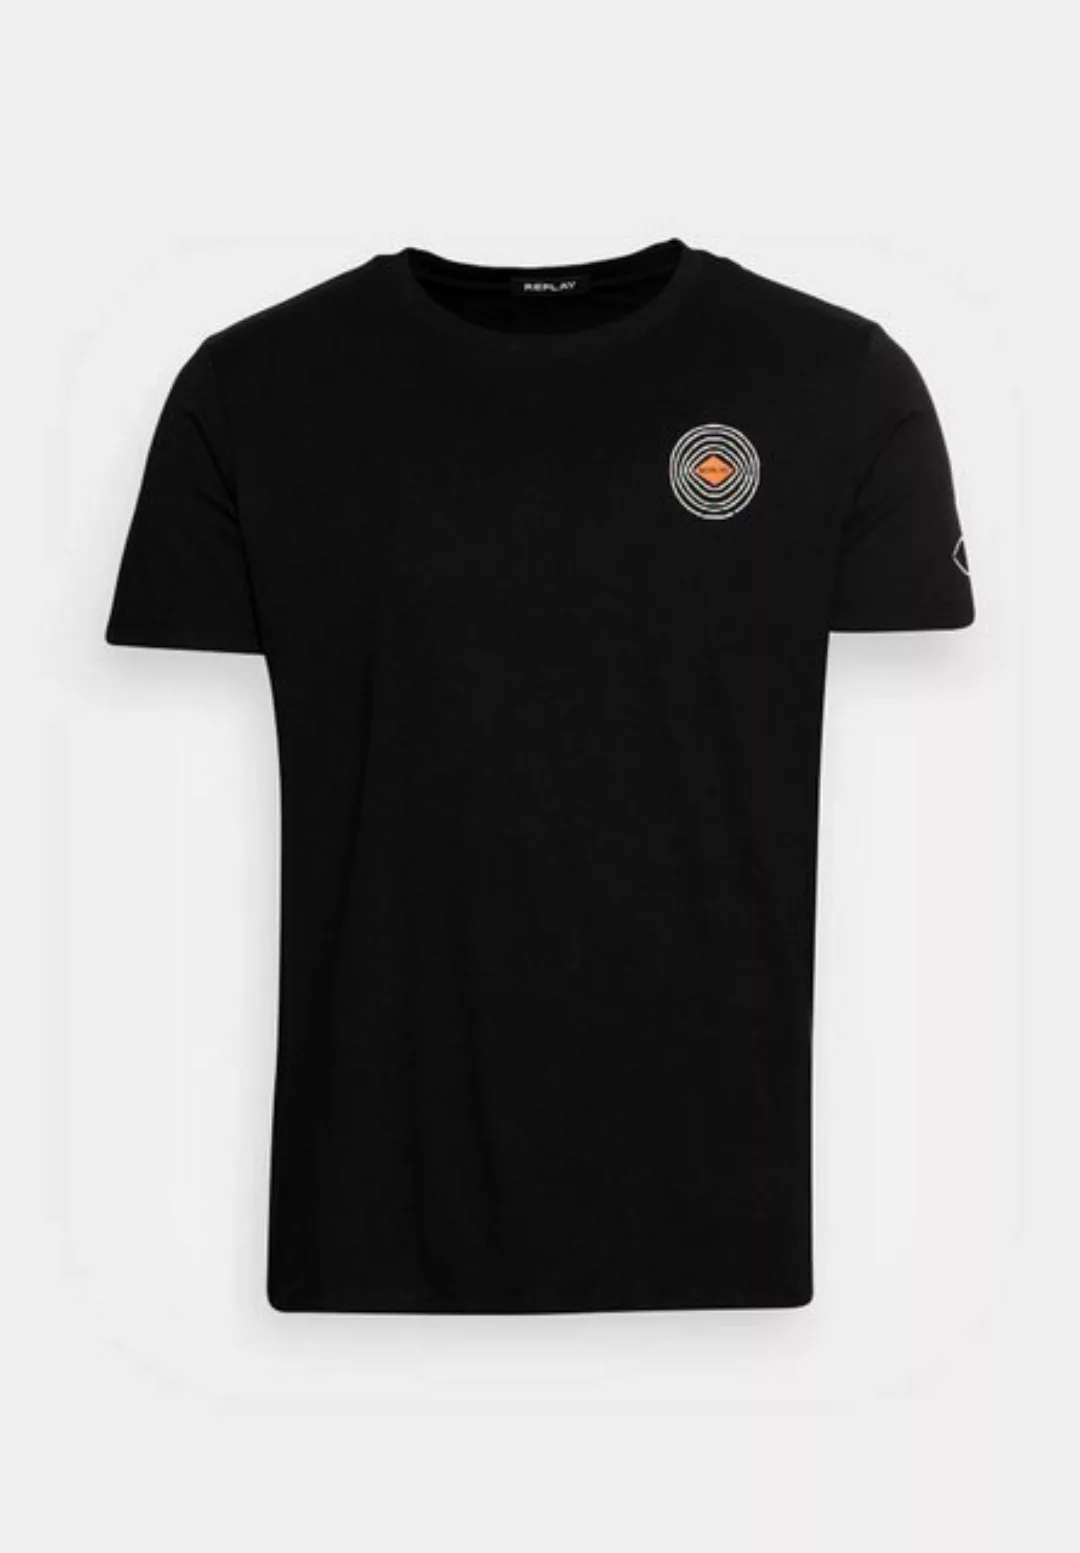 Replay Print-Shirt günstig online kaufen